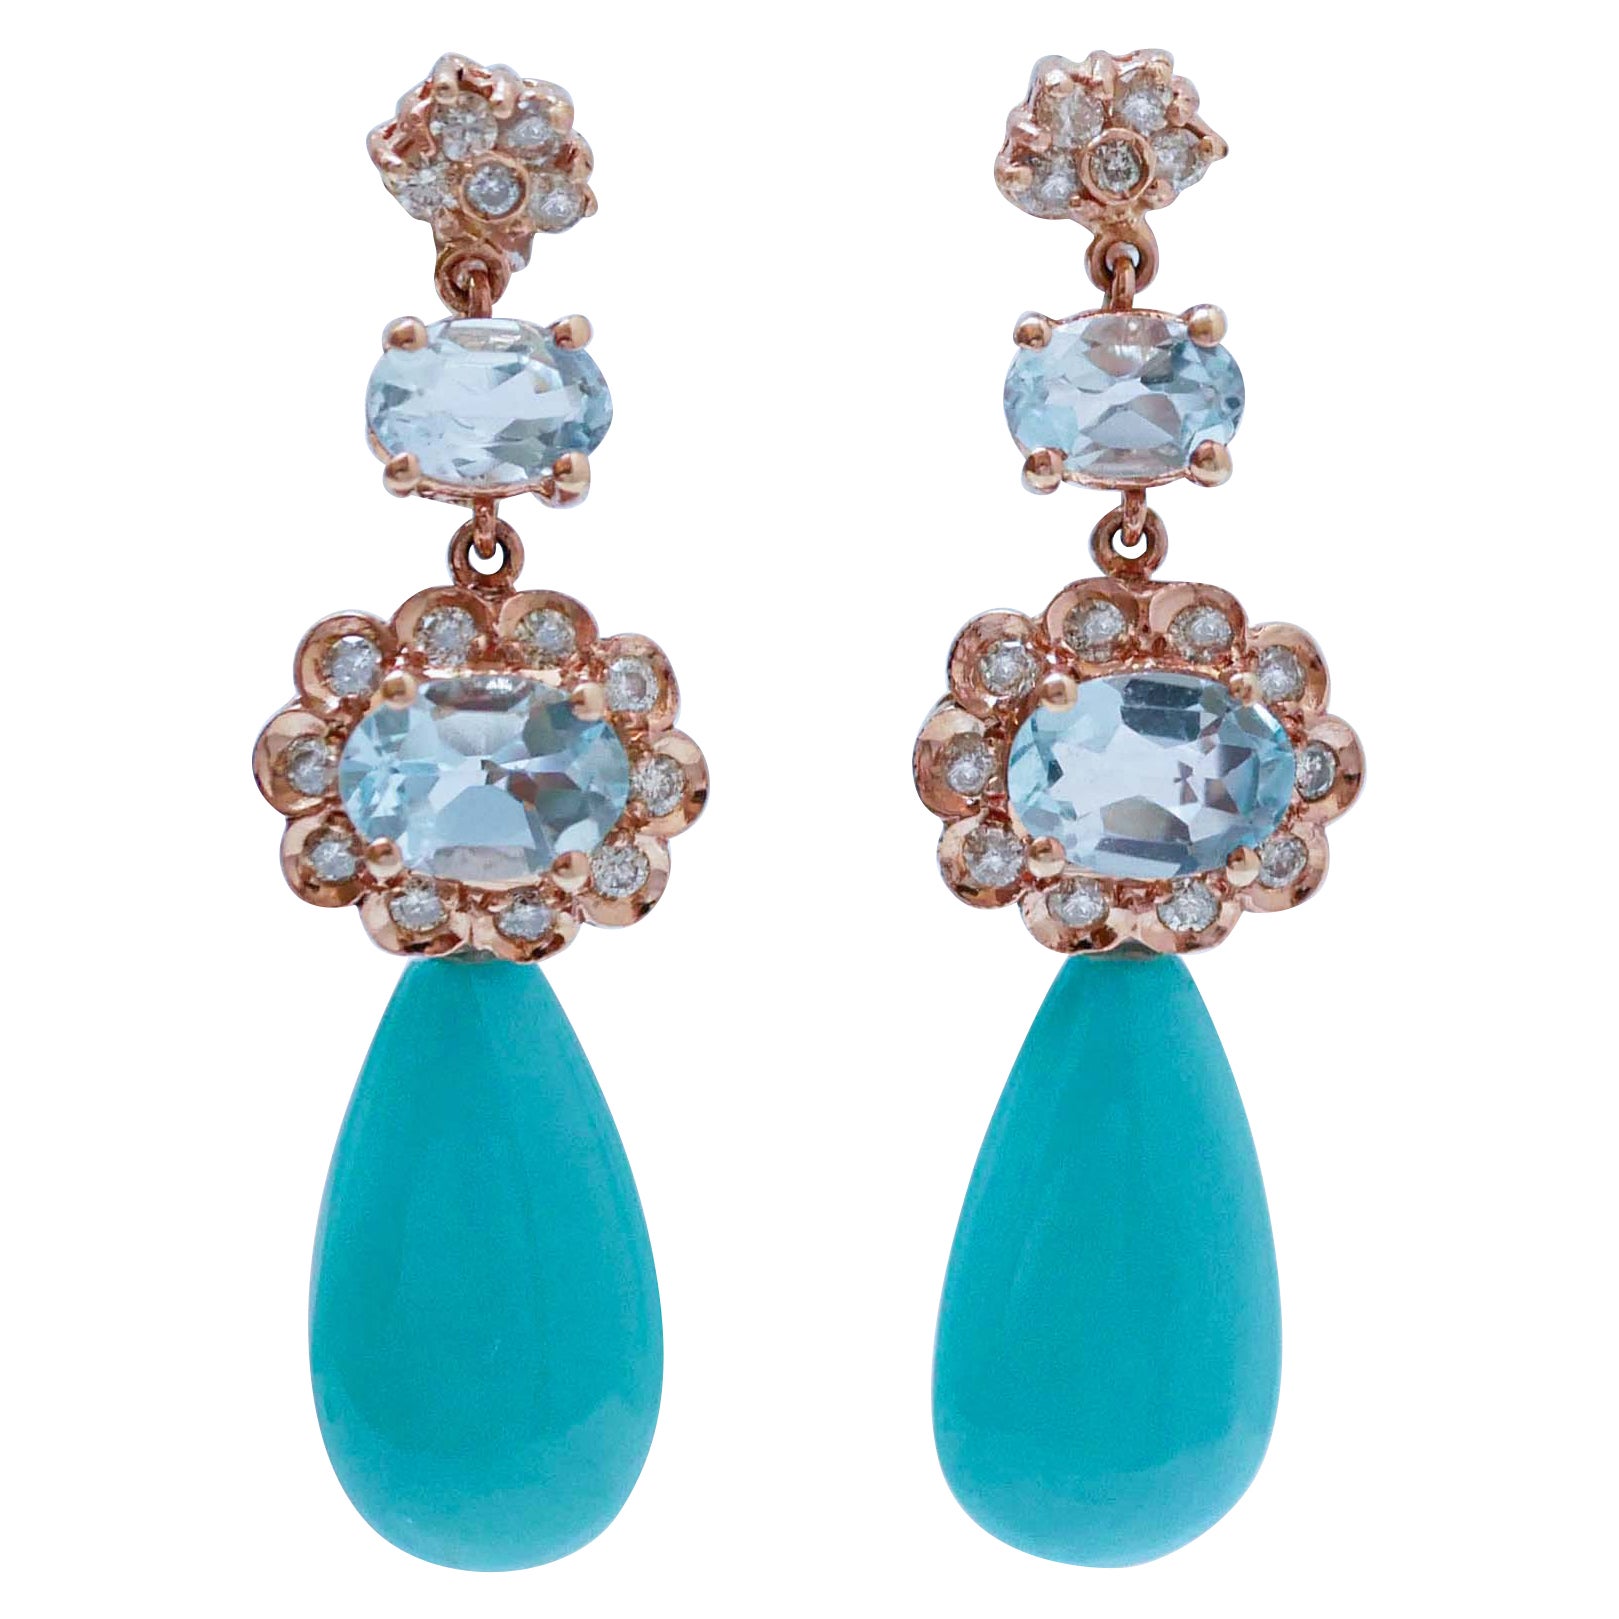 Turquoise, Aquamarina Colour Topazs, Diamonds, 14 Kt Rose Gold Earrings. For Sale